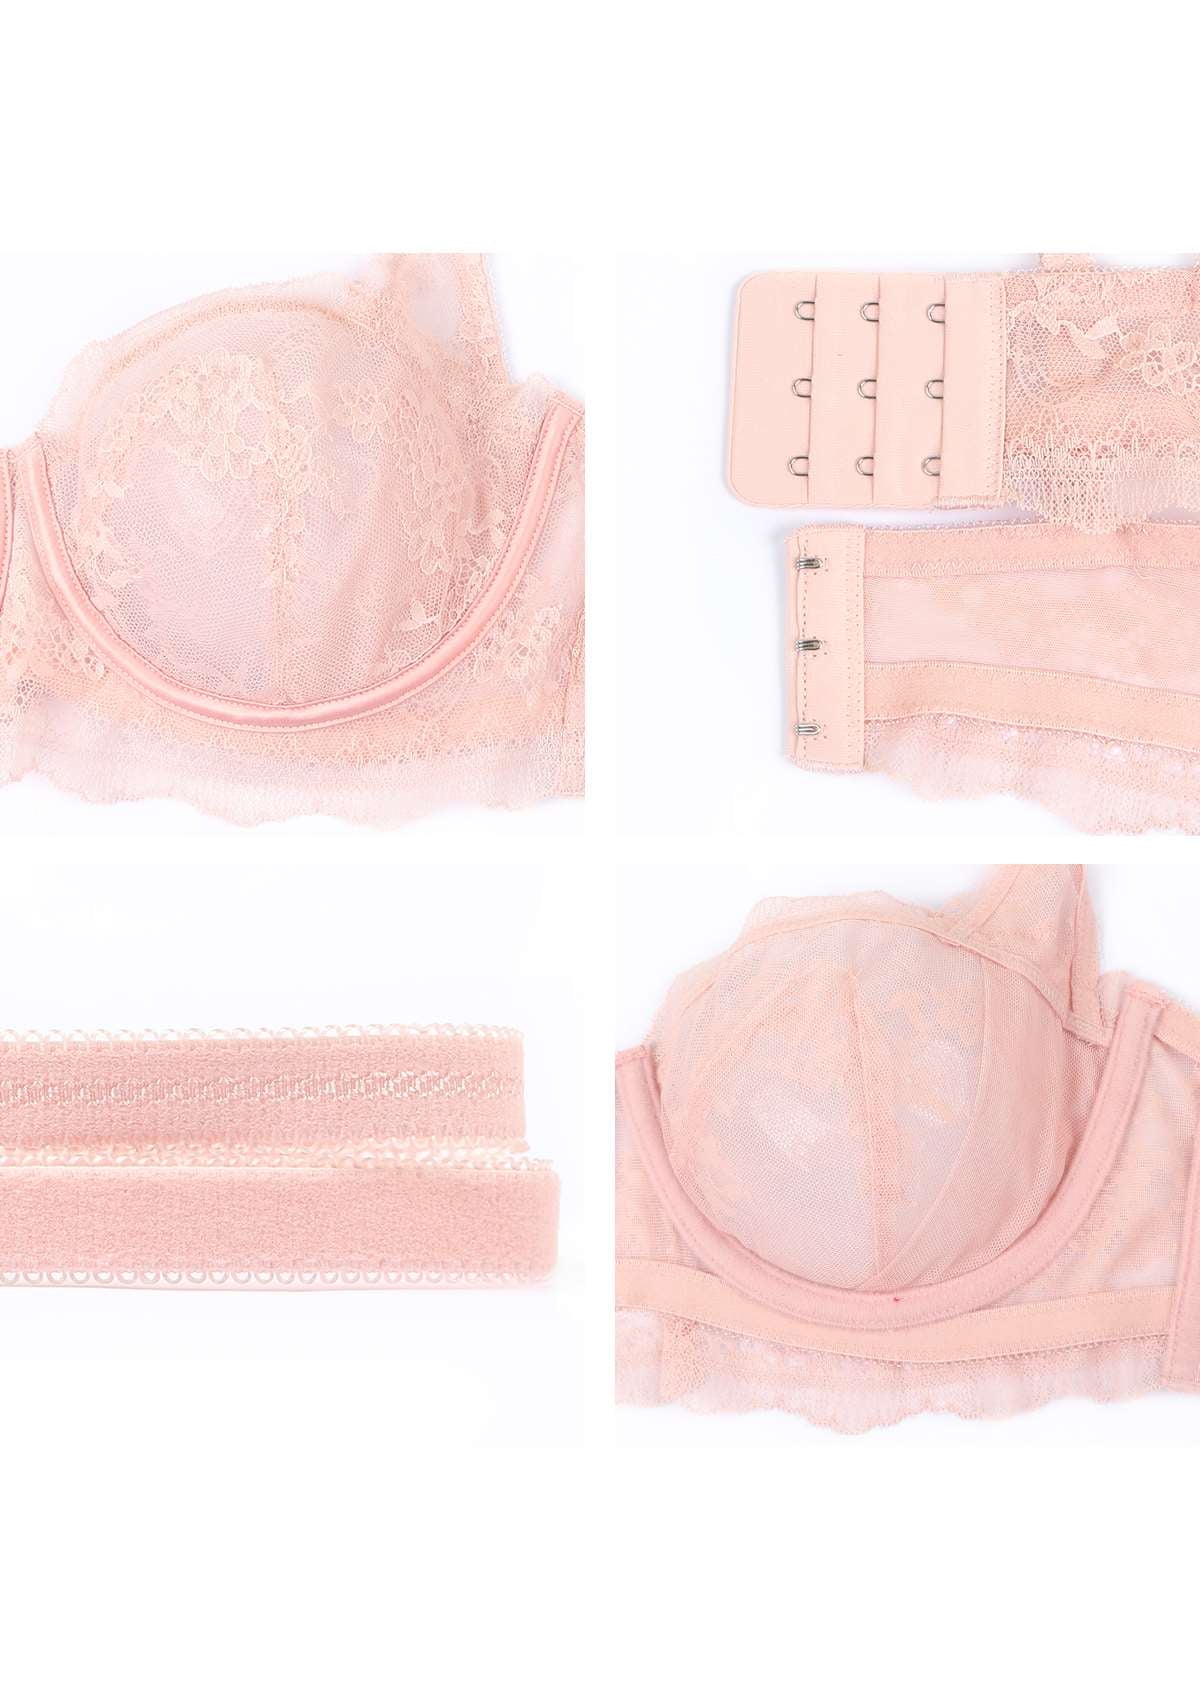 HSIA Floral Lace Unlined Bridal Balconette Delicate Bra Panty Set - Pink / 40 / D